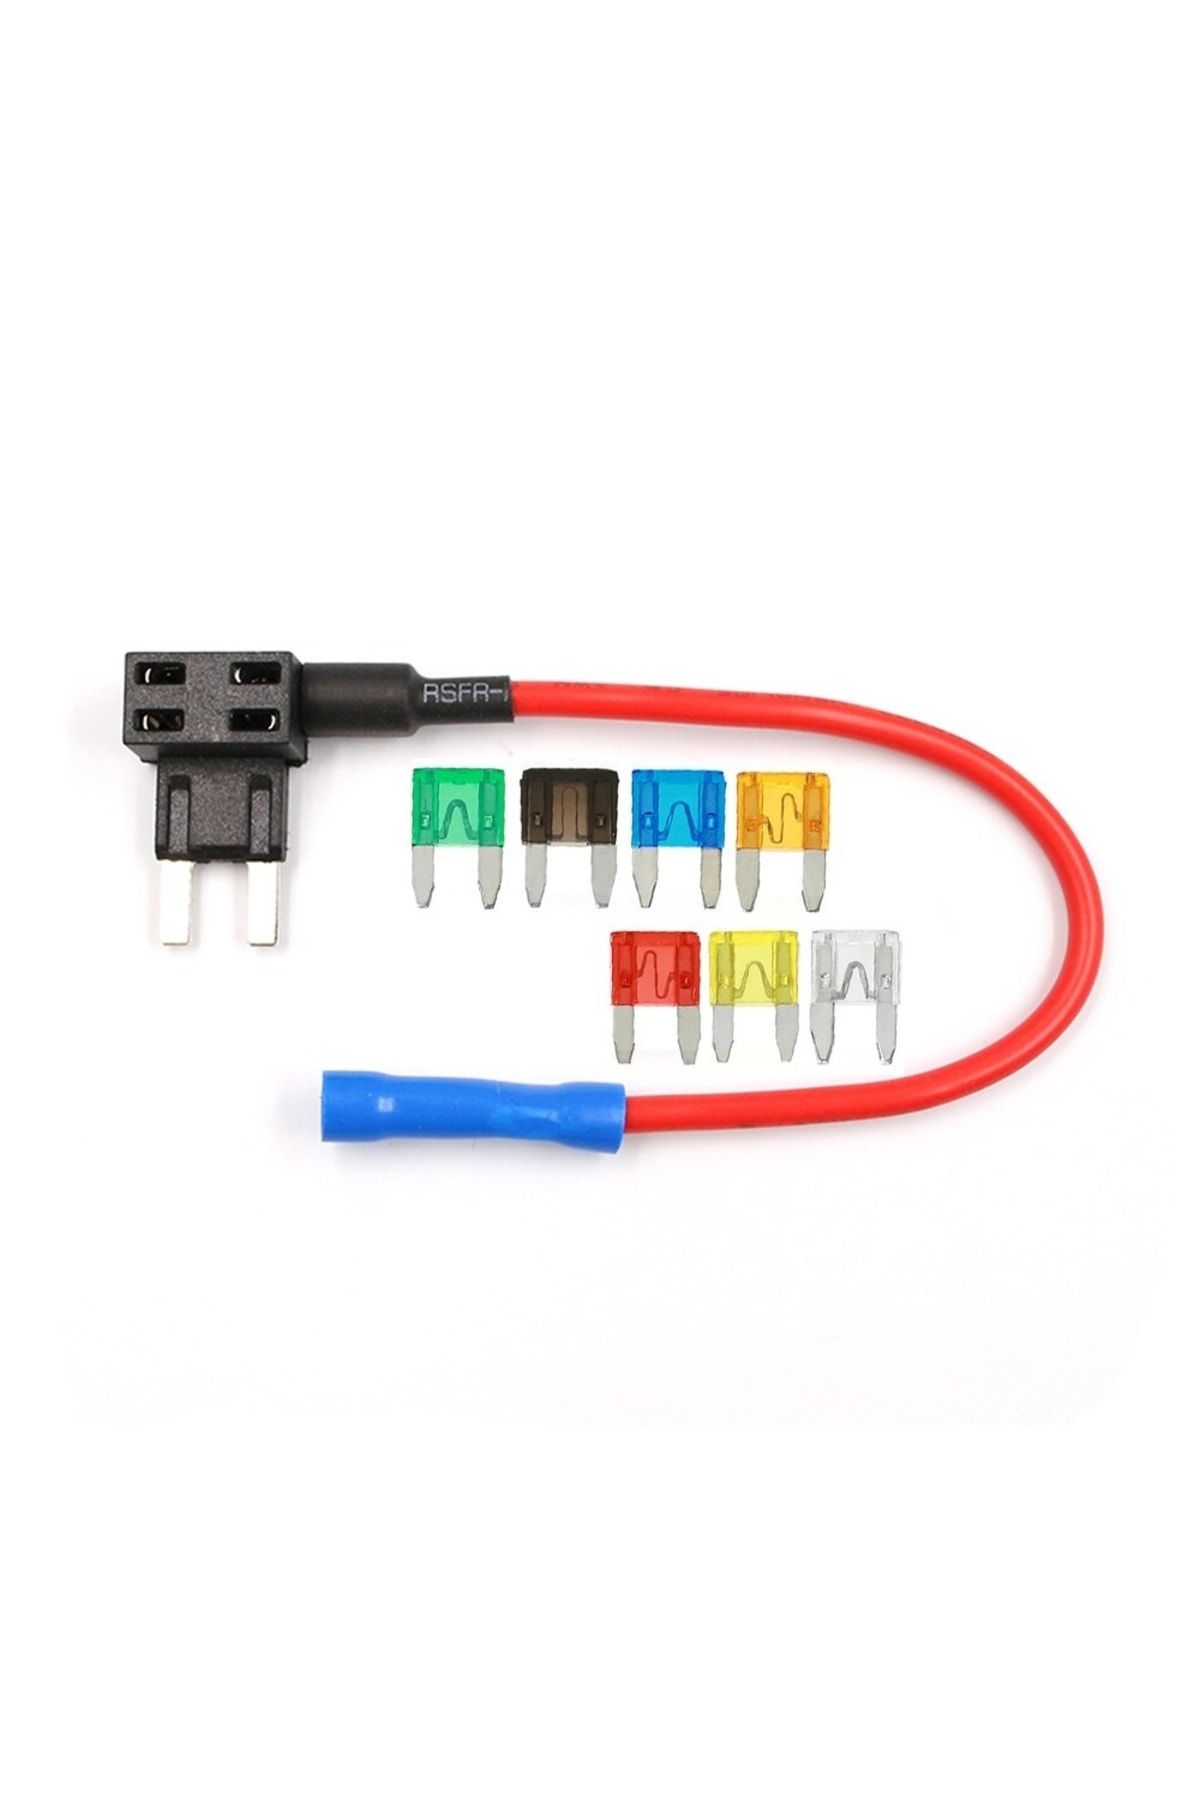 Maflen Mini Sigorta Ekleme Kablo Fuse Tap 7x Sigorta Hediye-s1852 Paket Içeriği: 1 Set